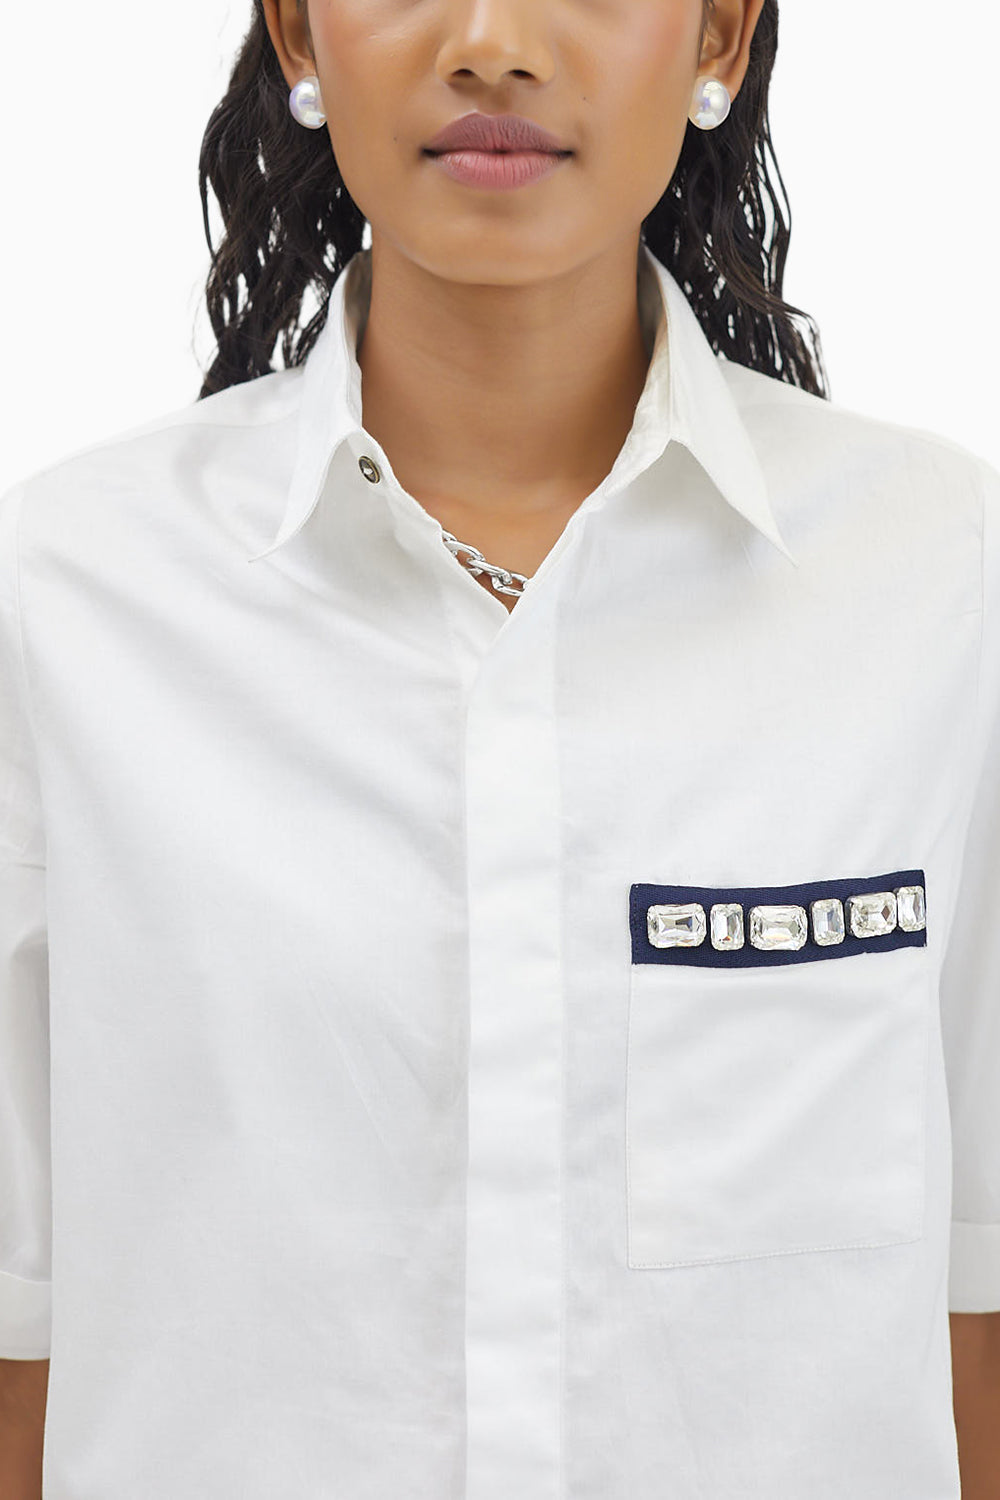 White Rectangle Swarovski Pocket Shirt